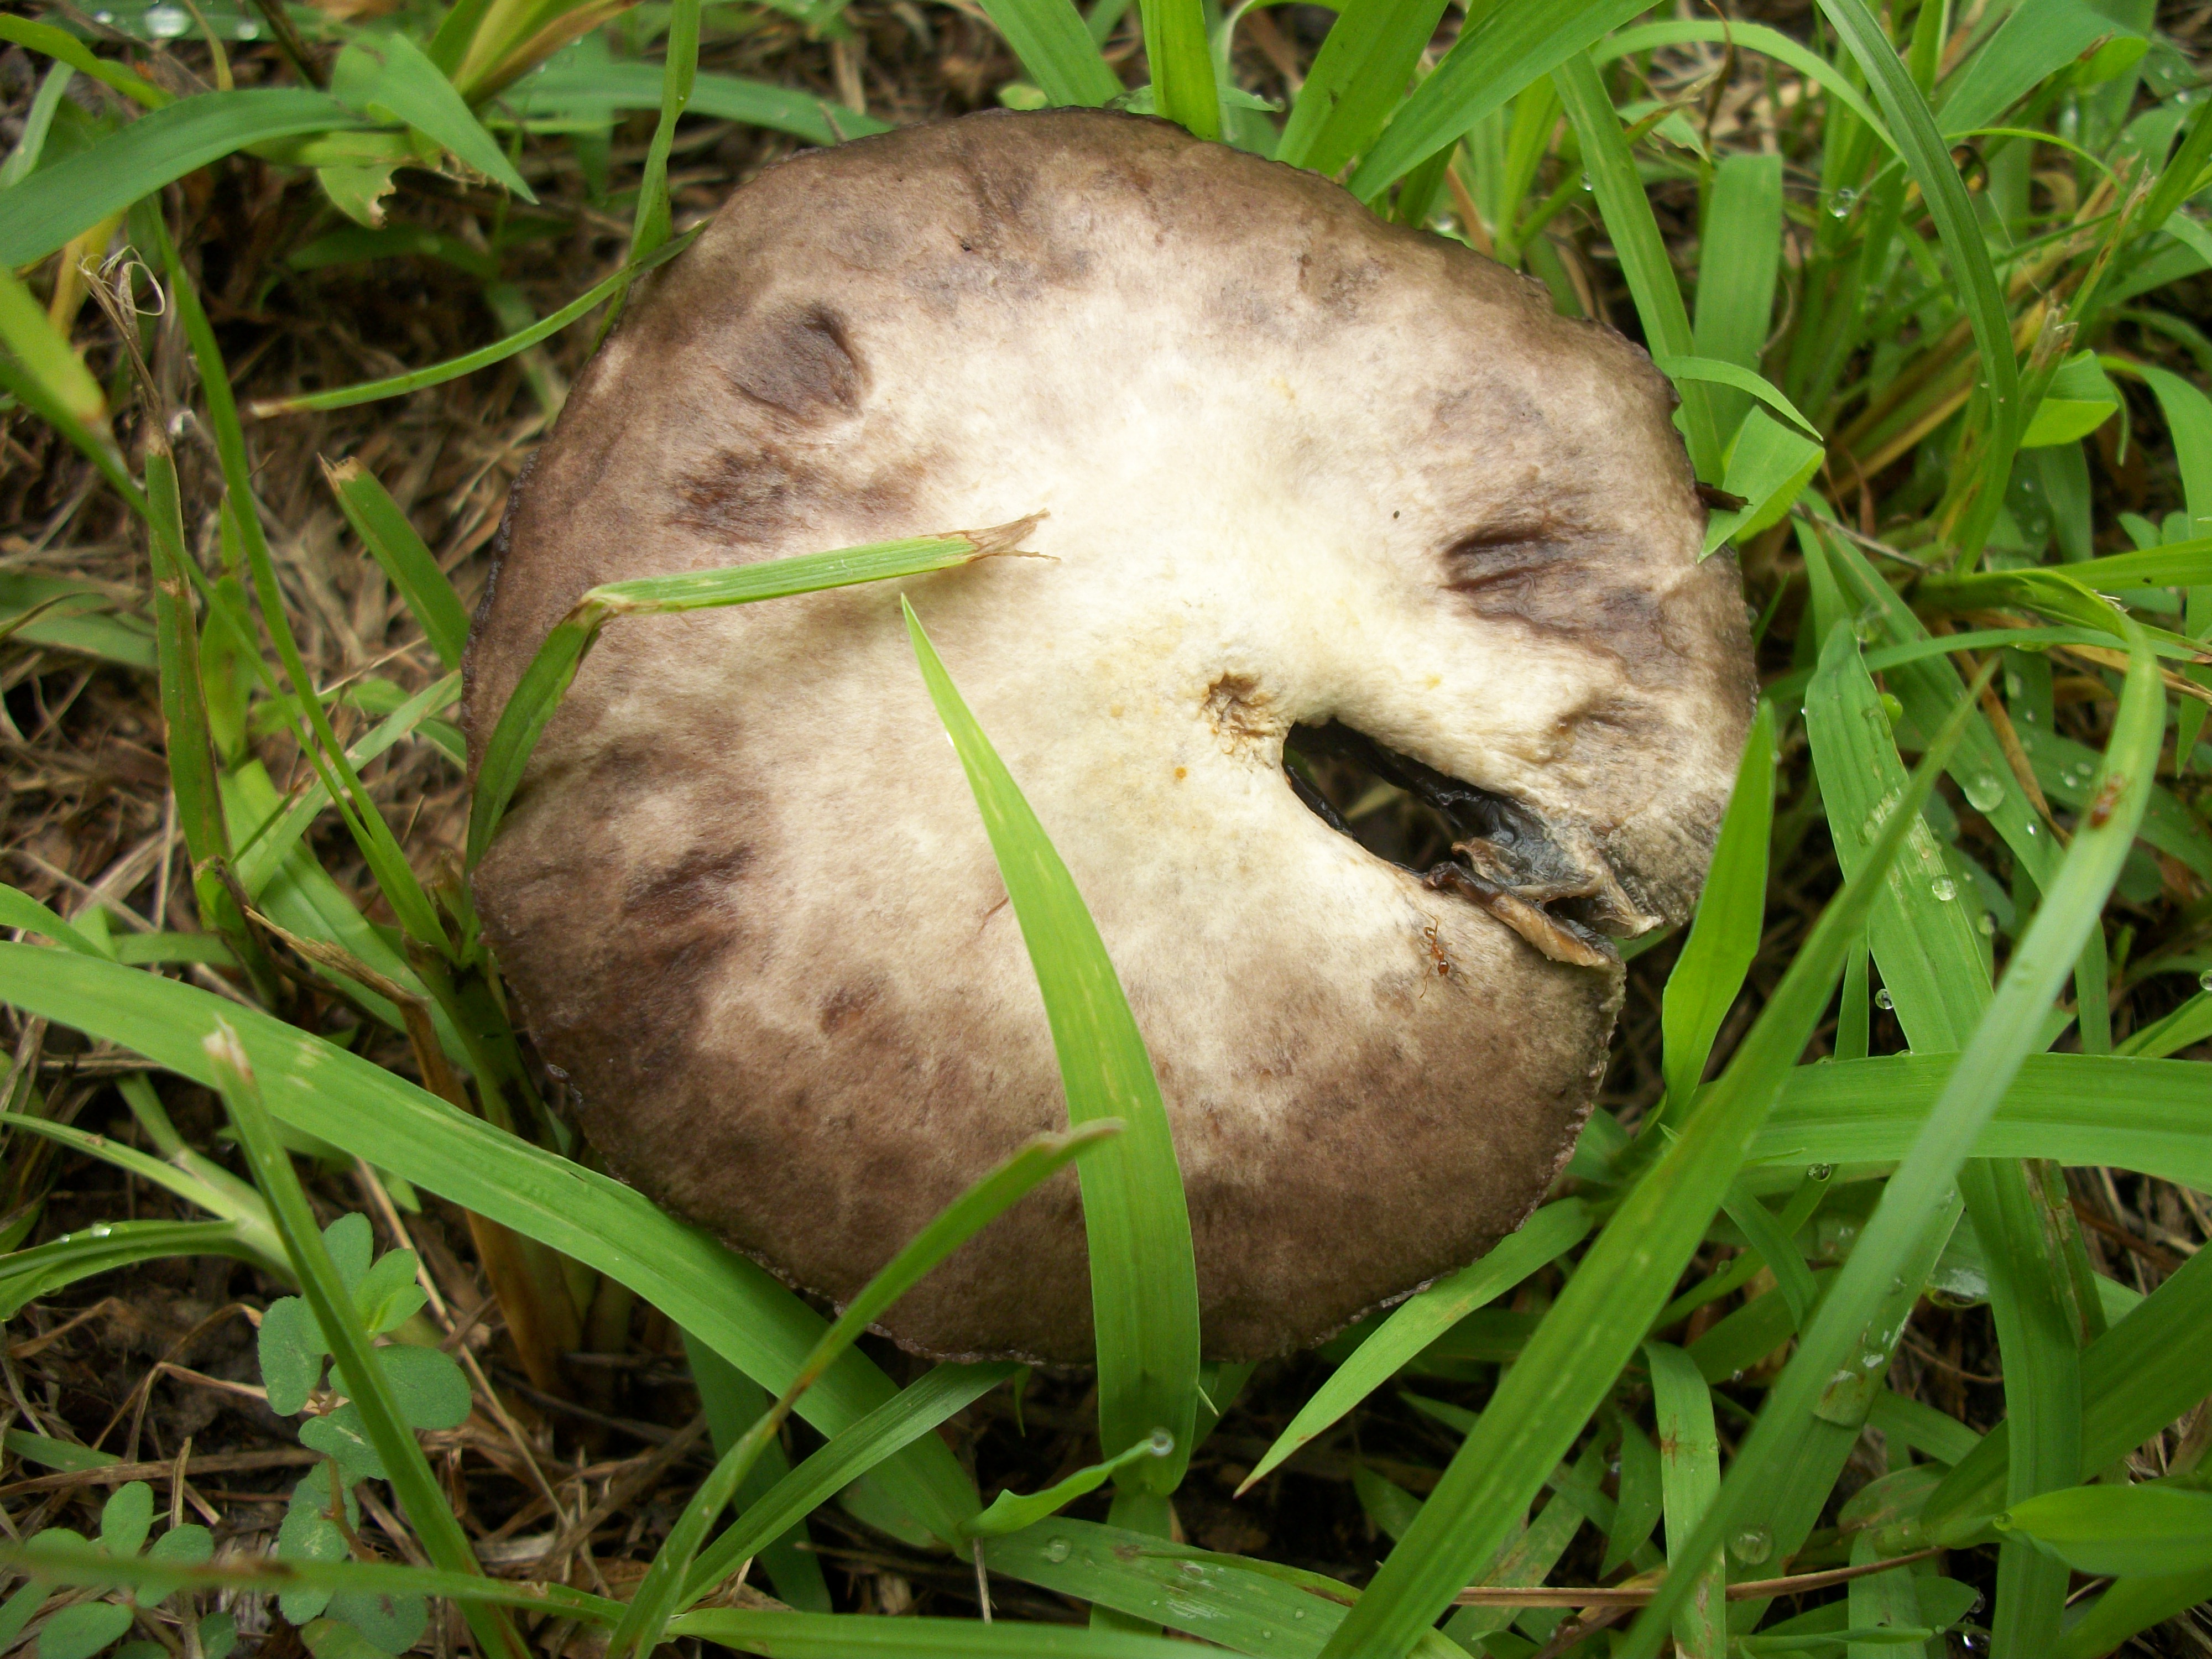 Wild mushroom photo